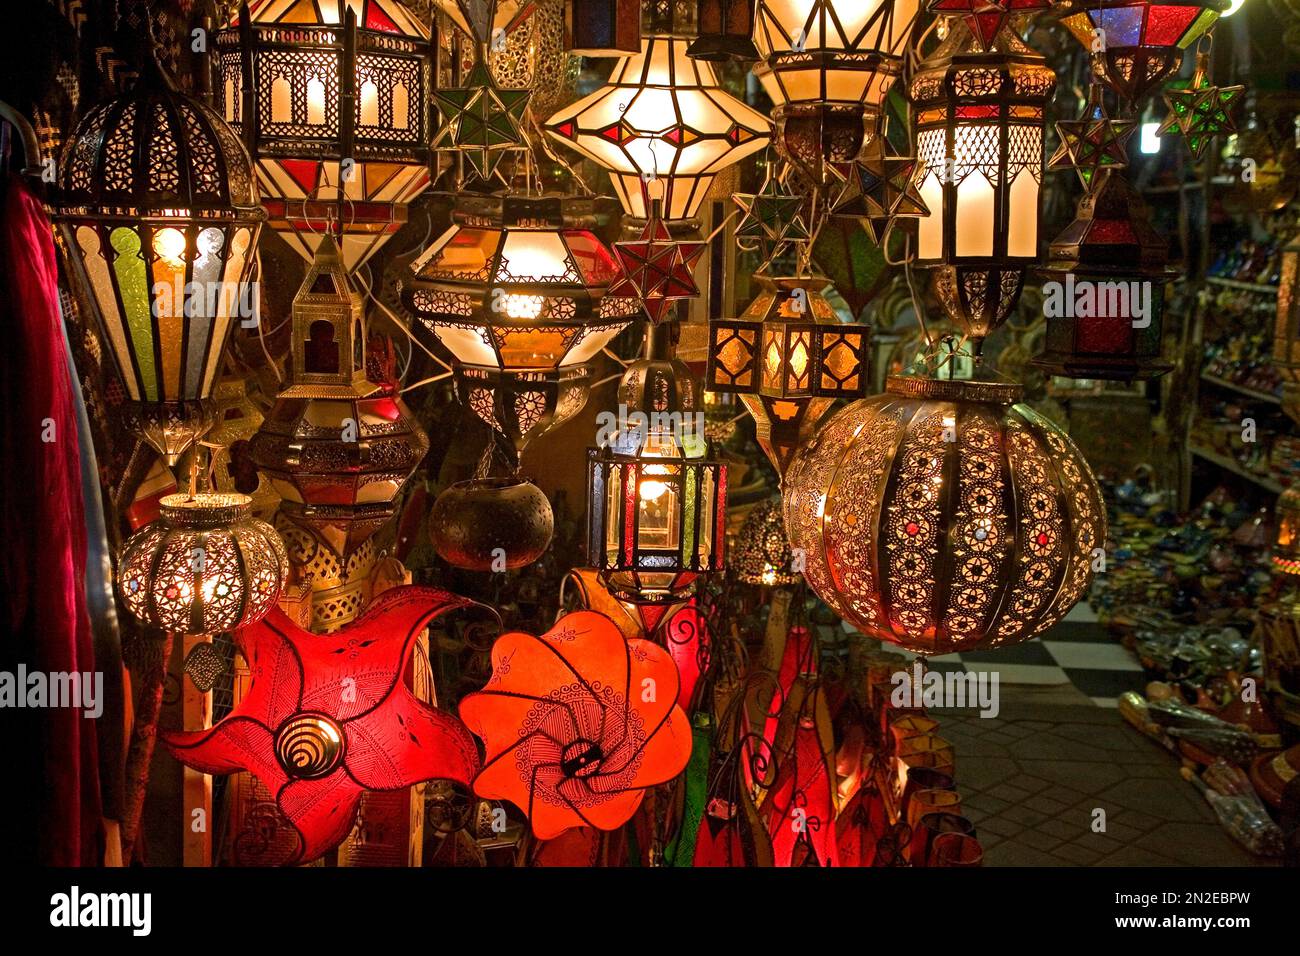 Lampengeschäft im nahe gelegenen Souk, Marrakesch, Marokko, Afrika  Stockfotografie - Alamy